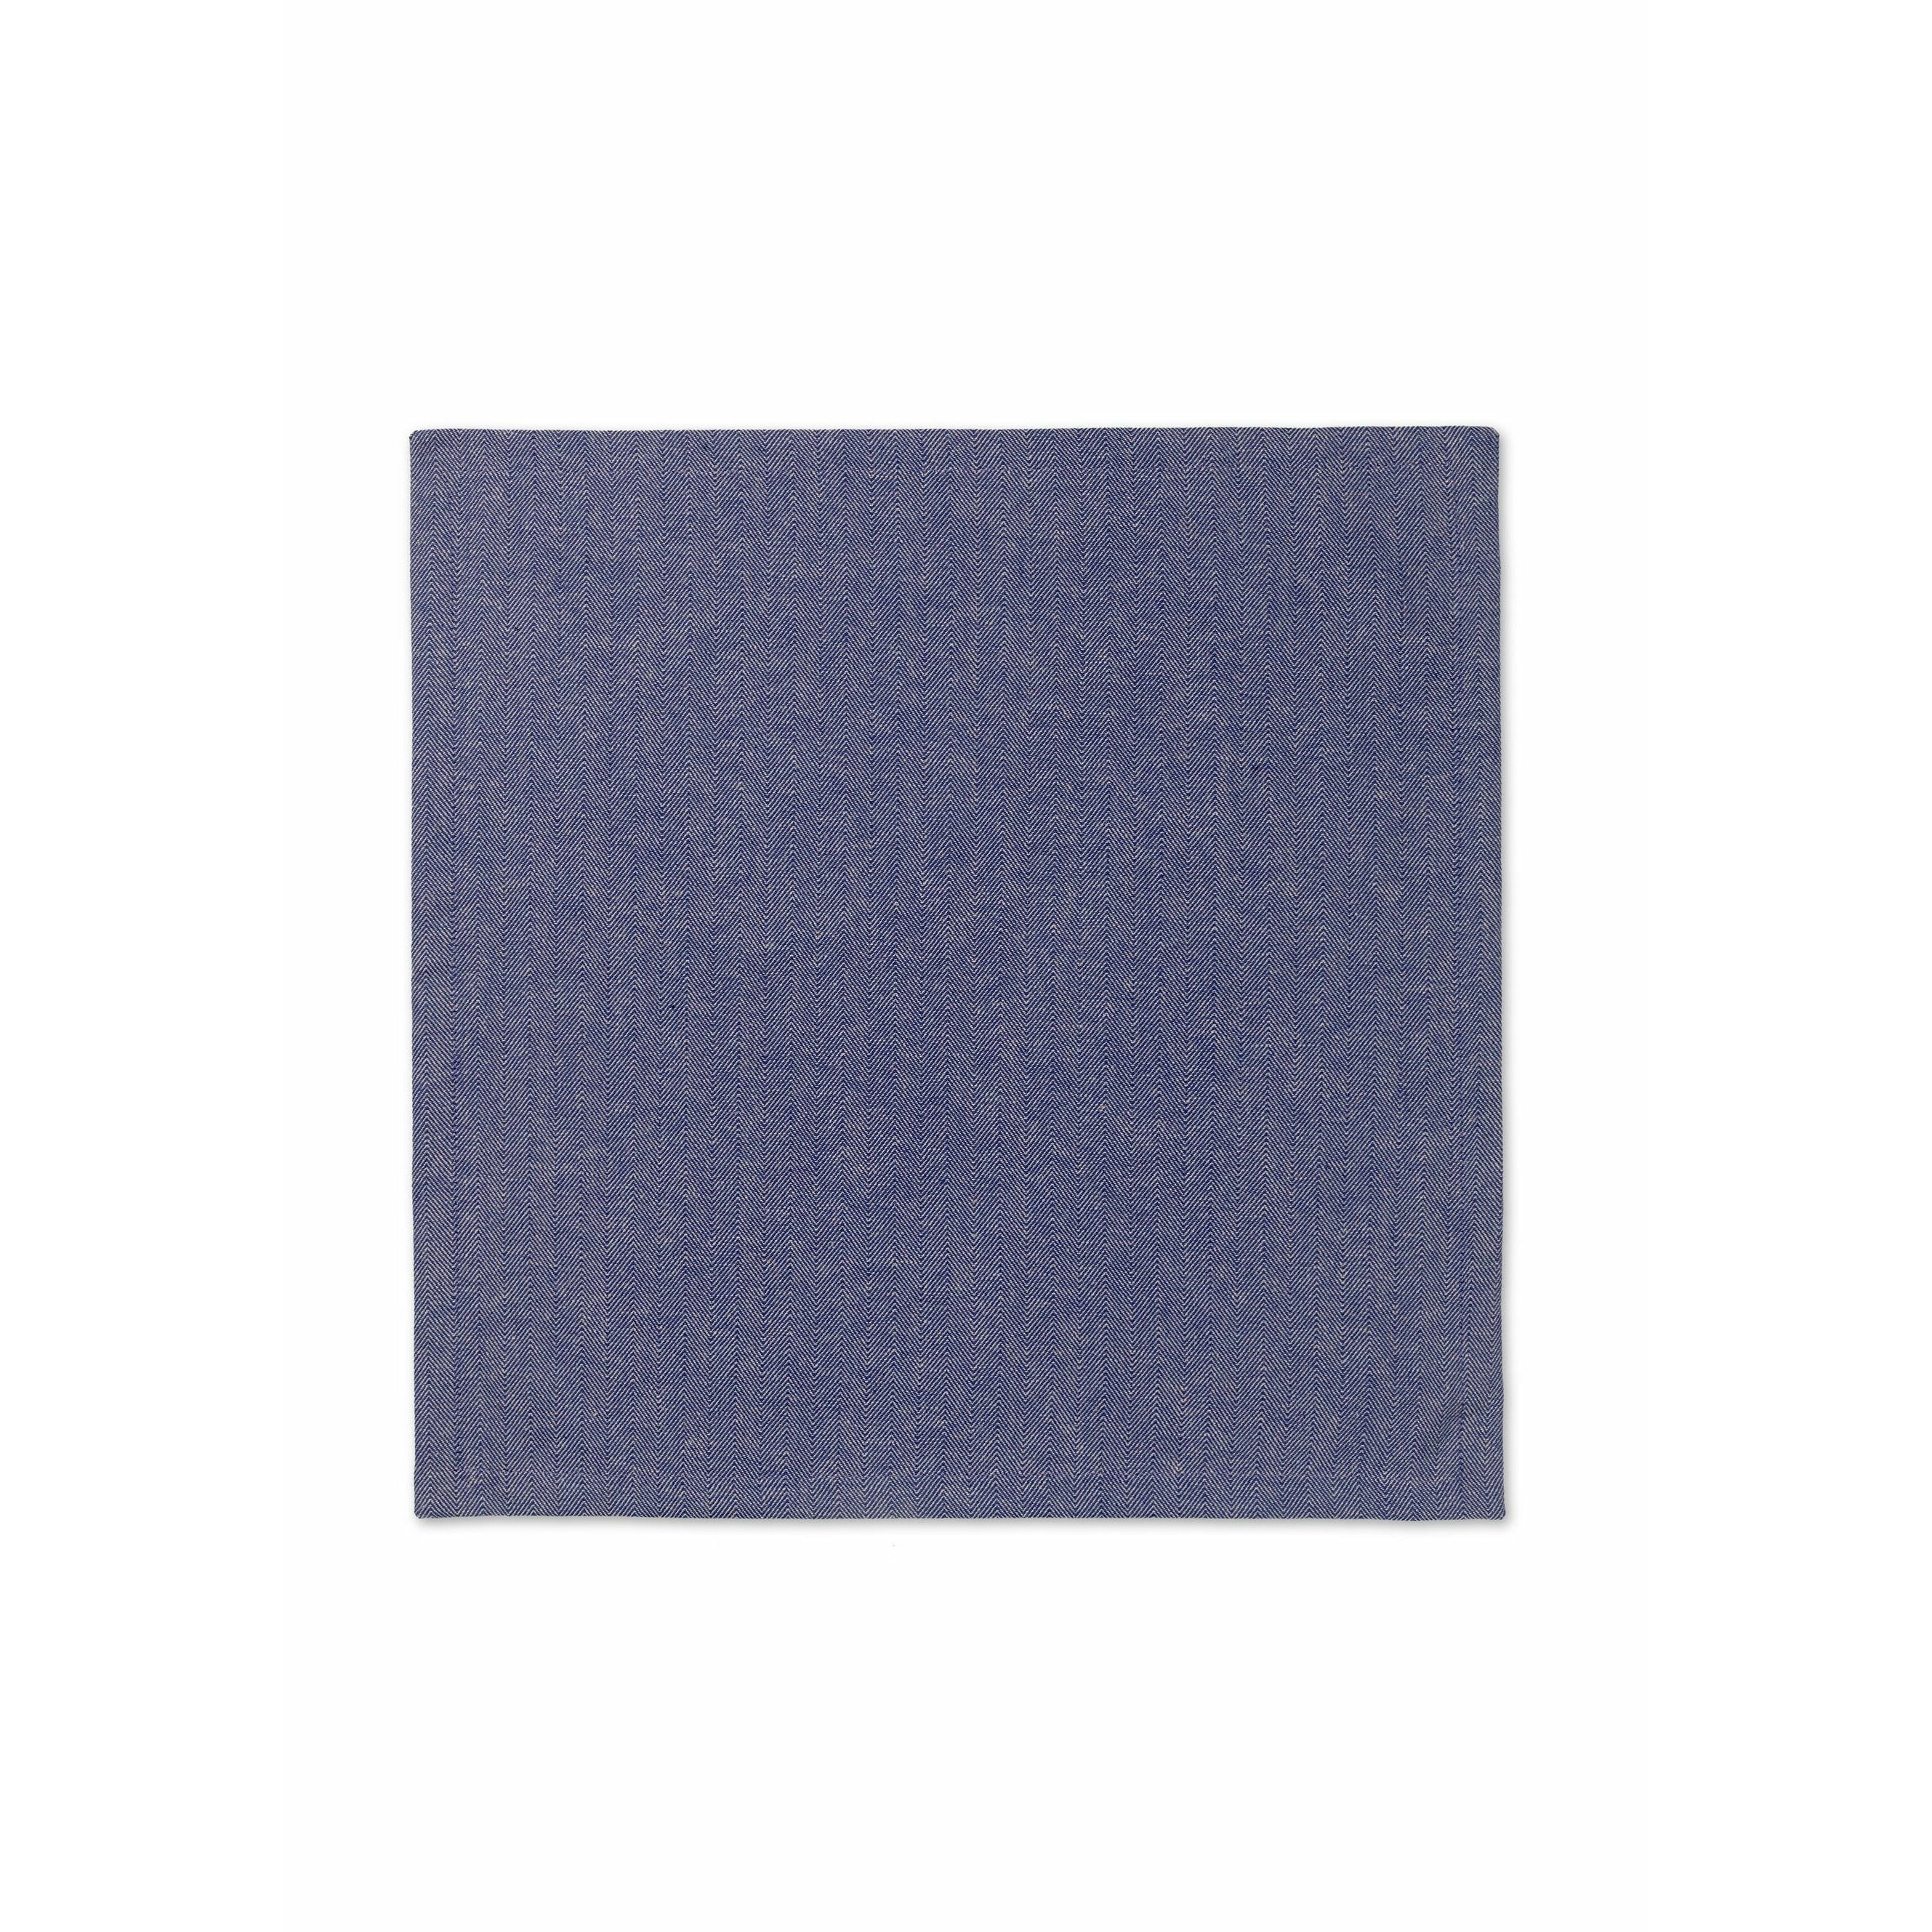 NYNGBY PORCELLEN NOPKINS BASSO DI HERRINGE 45x45 cm blu, 4 pezzi.